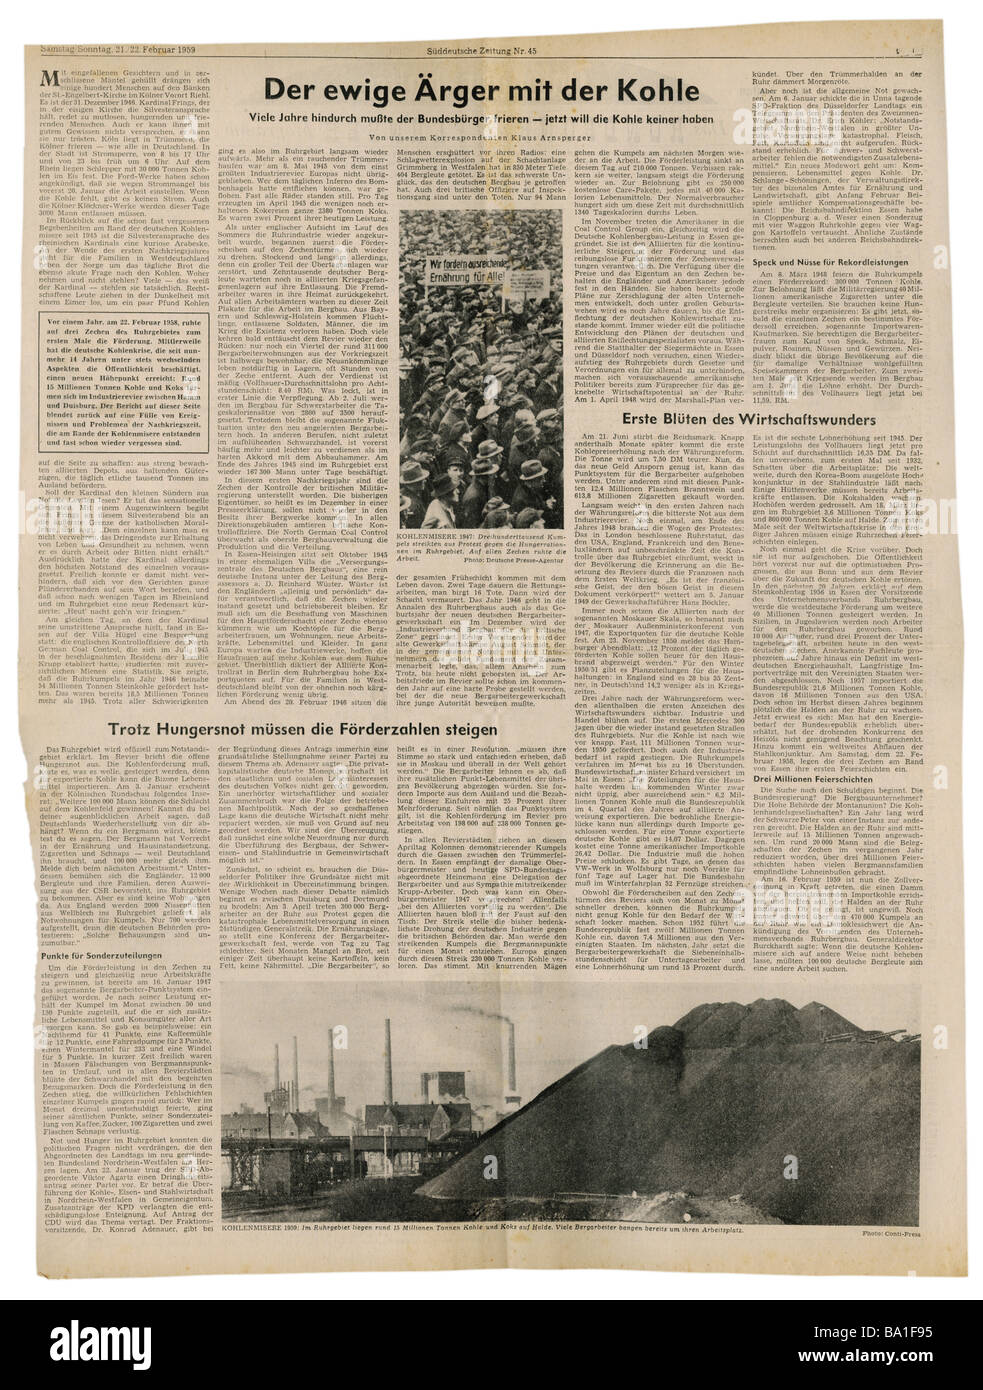 press/media, magazines, 'Süddeutsche Zeitung', Munich, 15 volume, number 45, Saturday / Sunday 21. / 22.2.1959, article, problems with coal output, Stock Photo